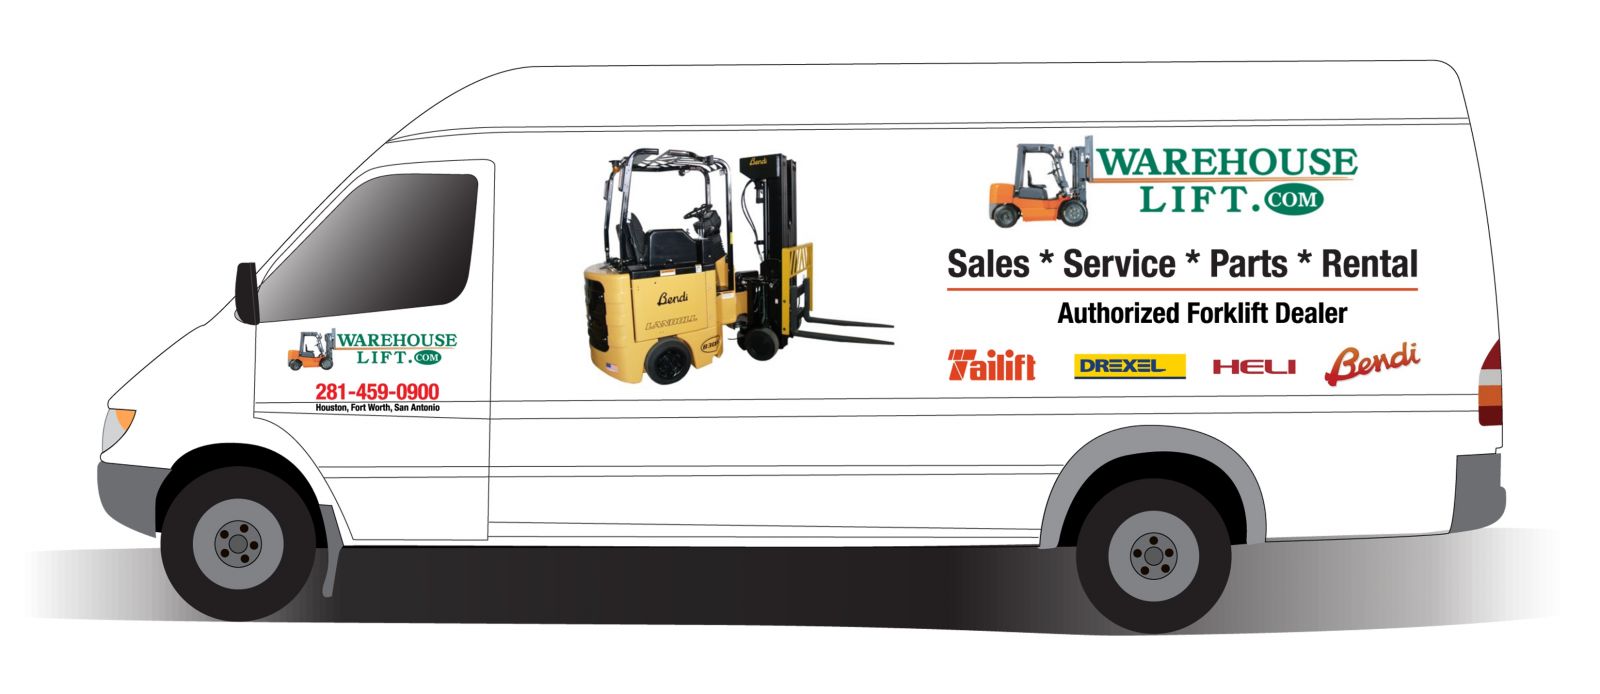 Used New Forklift Service Forklift Repair Forklift Maintenance Warehouserack Com